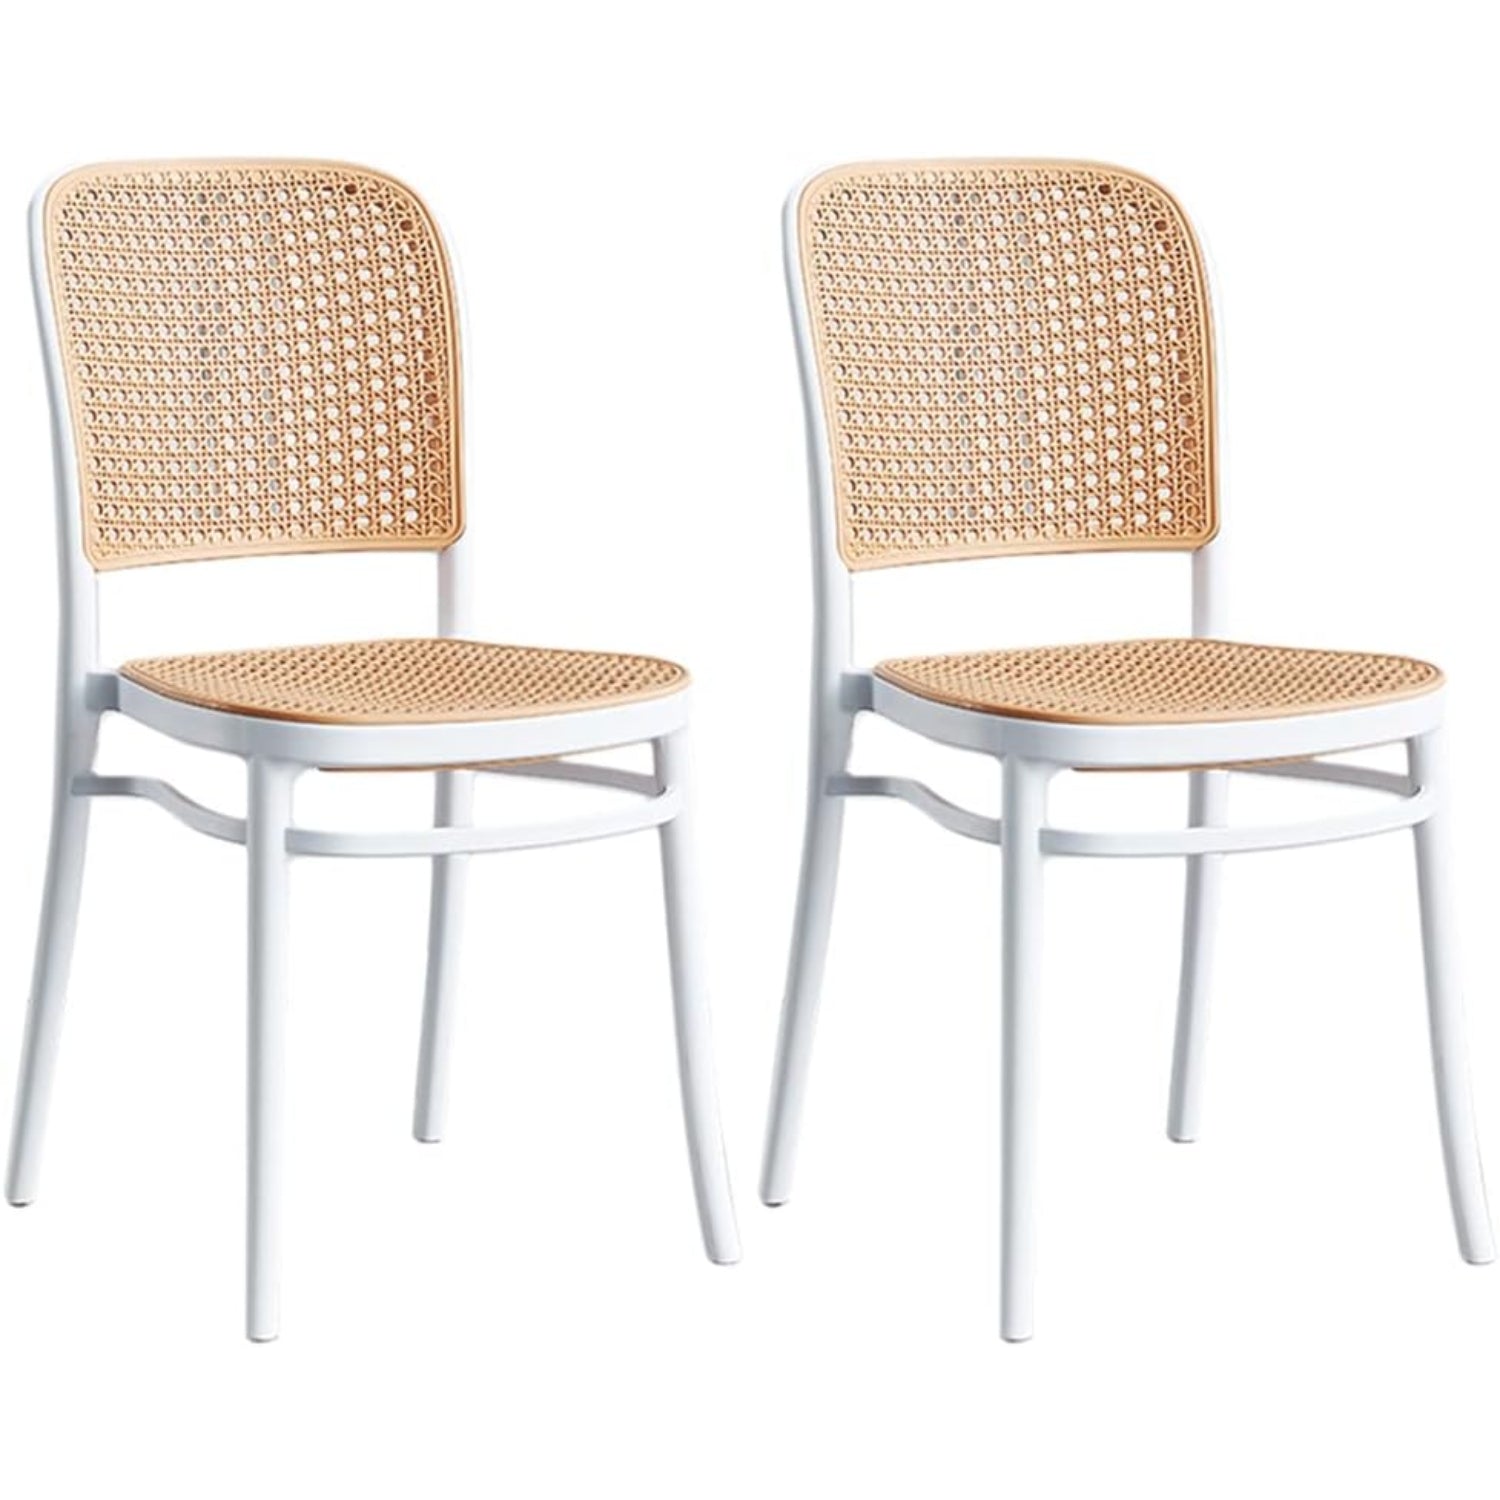 villa nova rattan weave plastic chair white next to each other